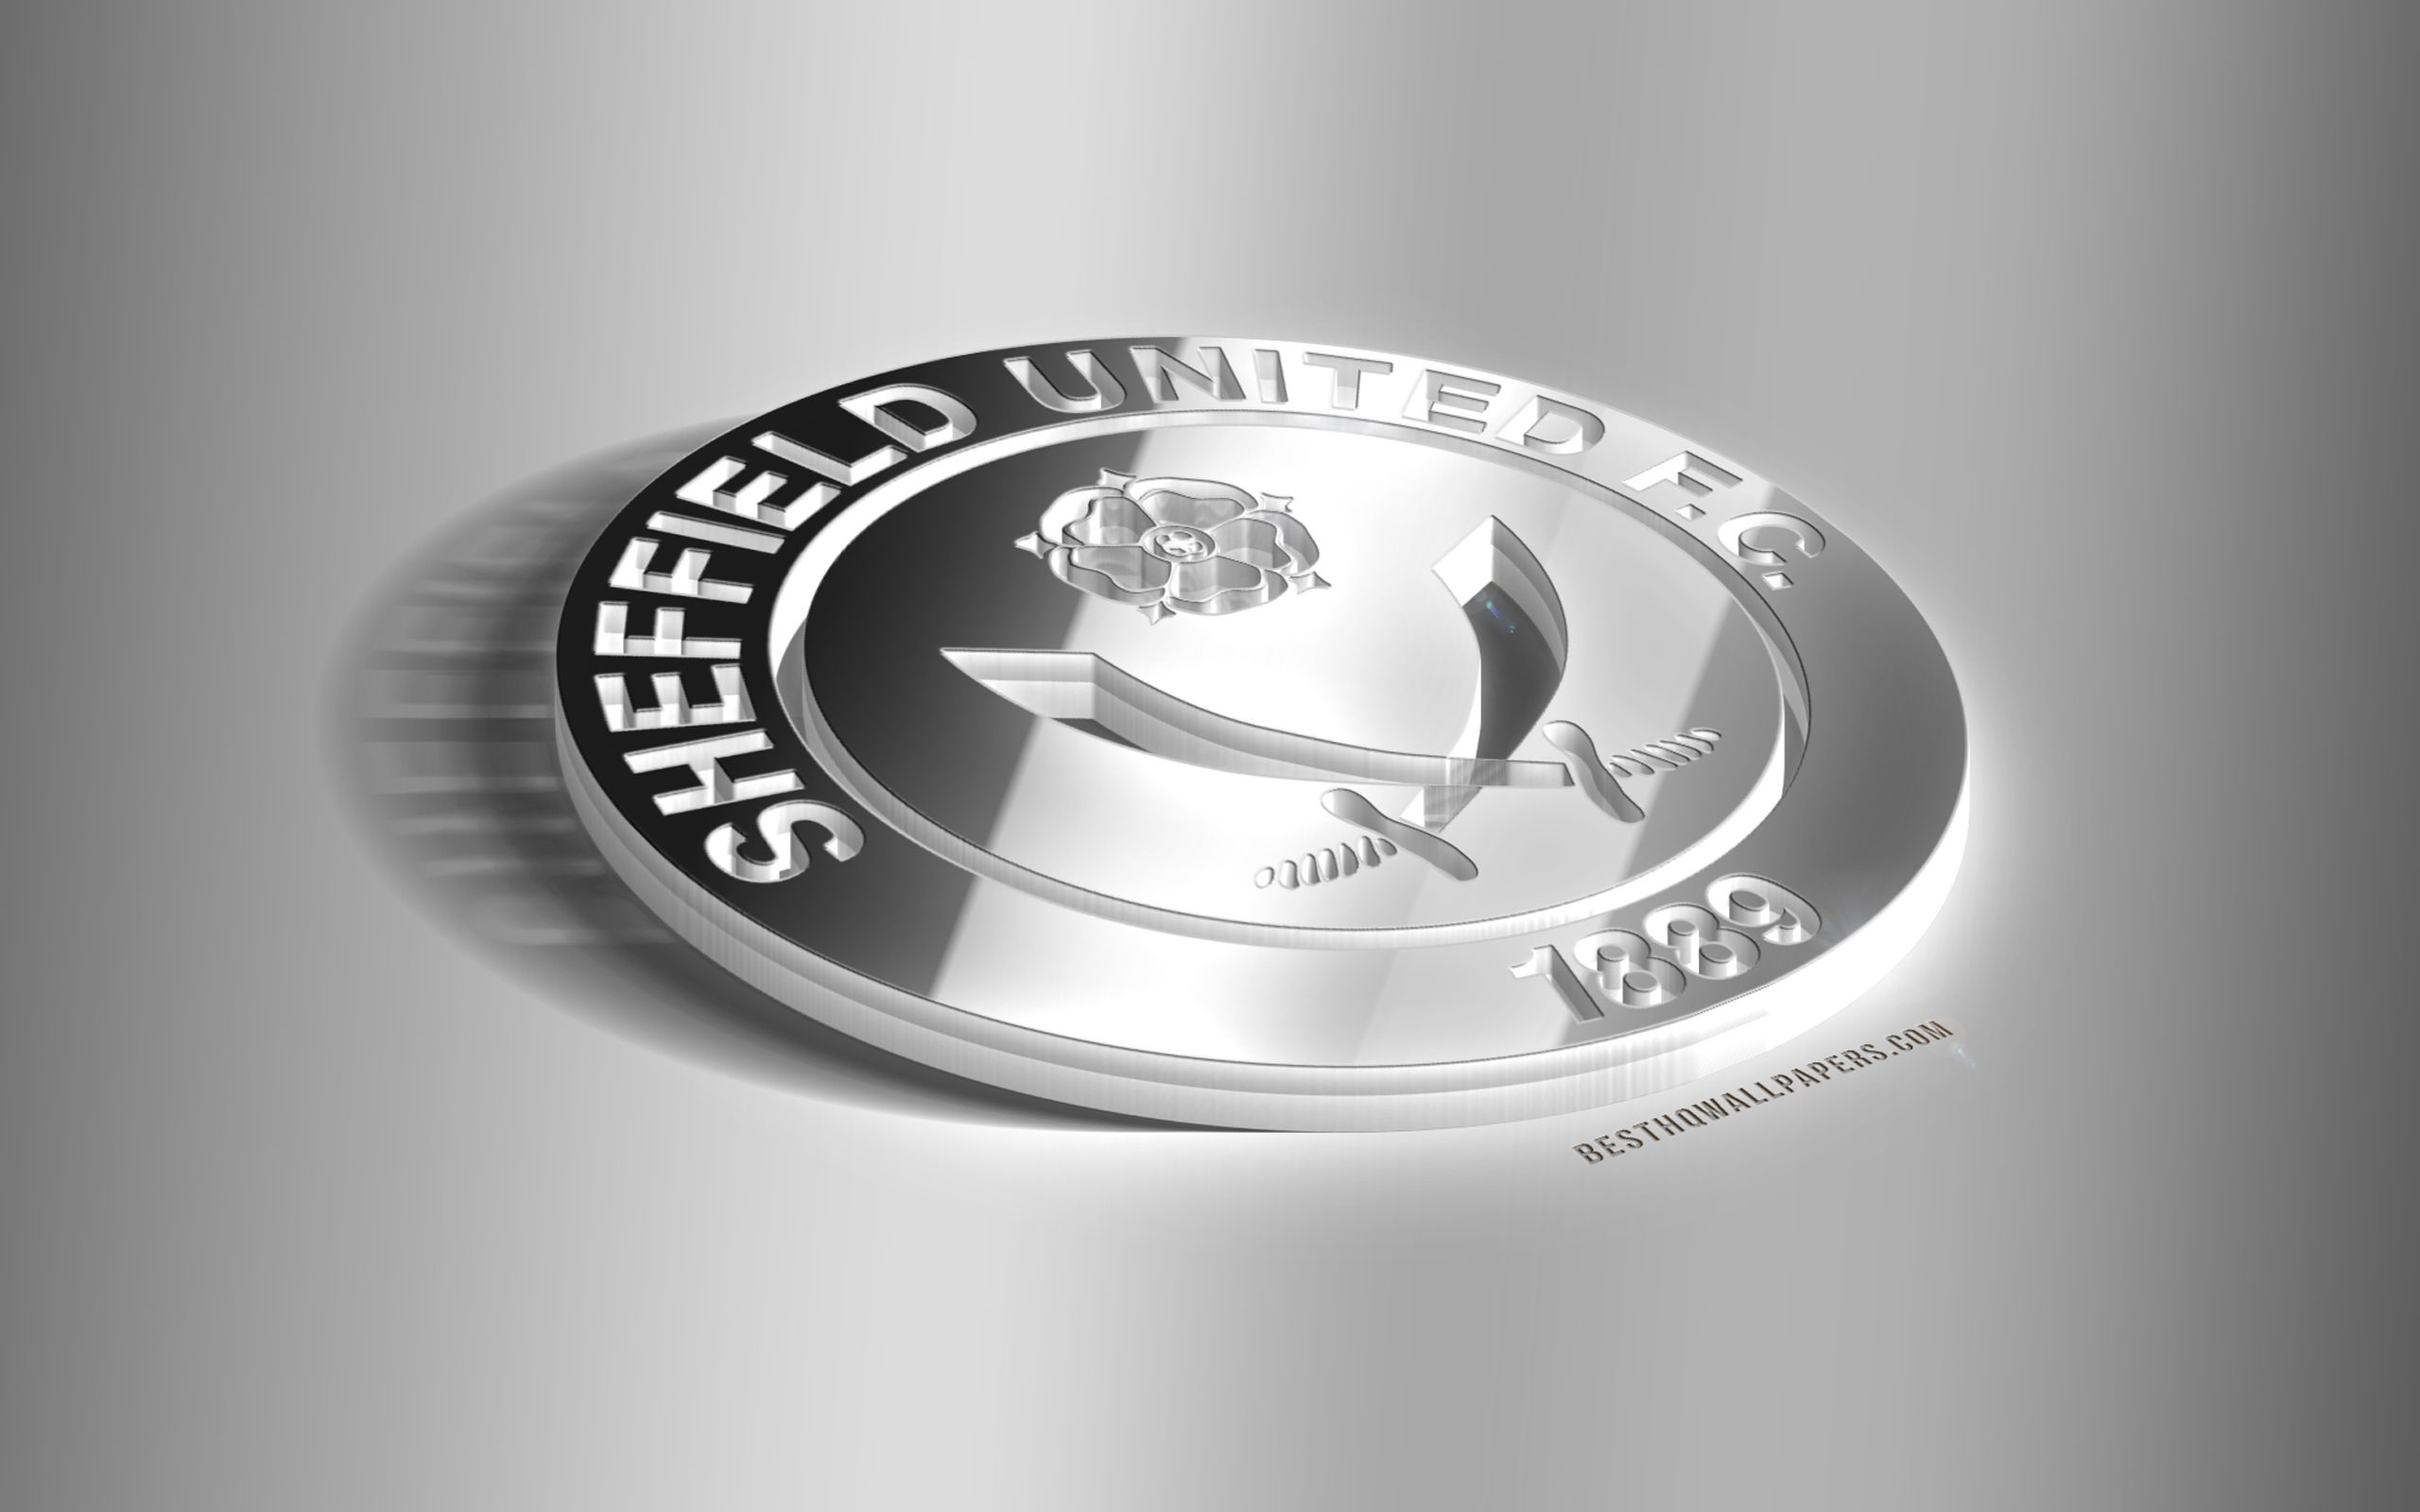 Download wallpaper Sheffield United FC, 3D steel logo, English